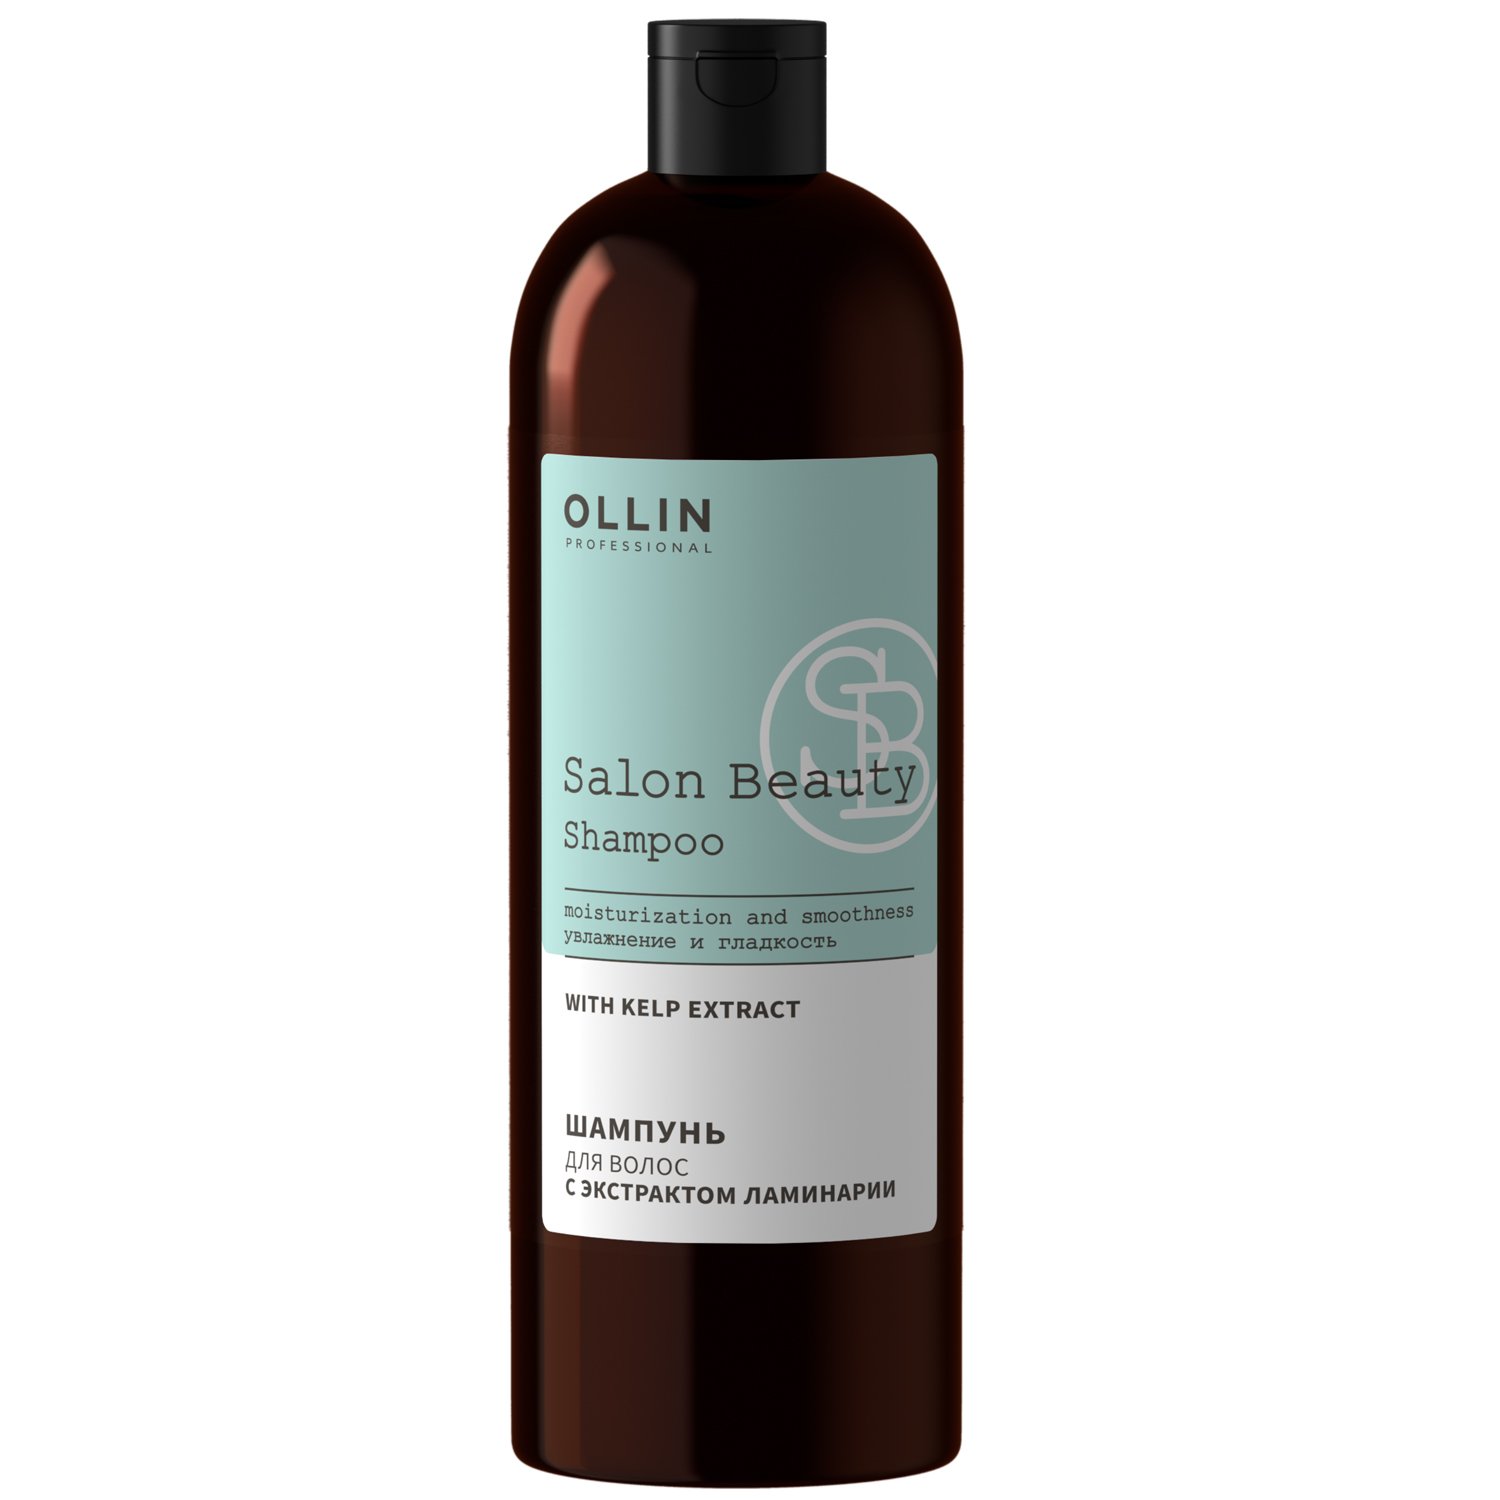 Ollin Professional Шампунь для волос с экстрактом ламинарии, 1000 мл (Ollin Professional, Salon Beauty)